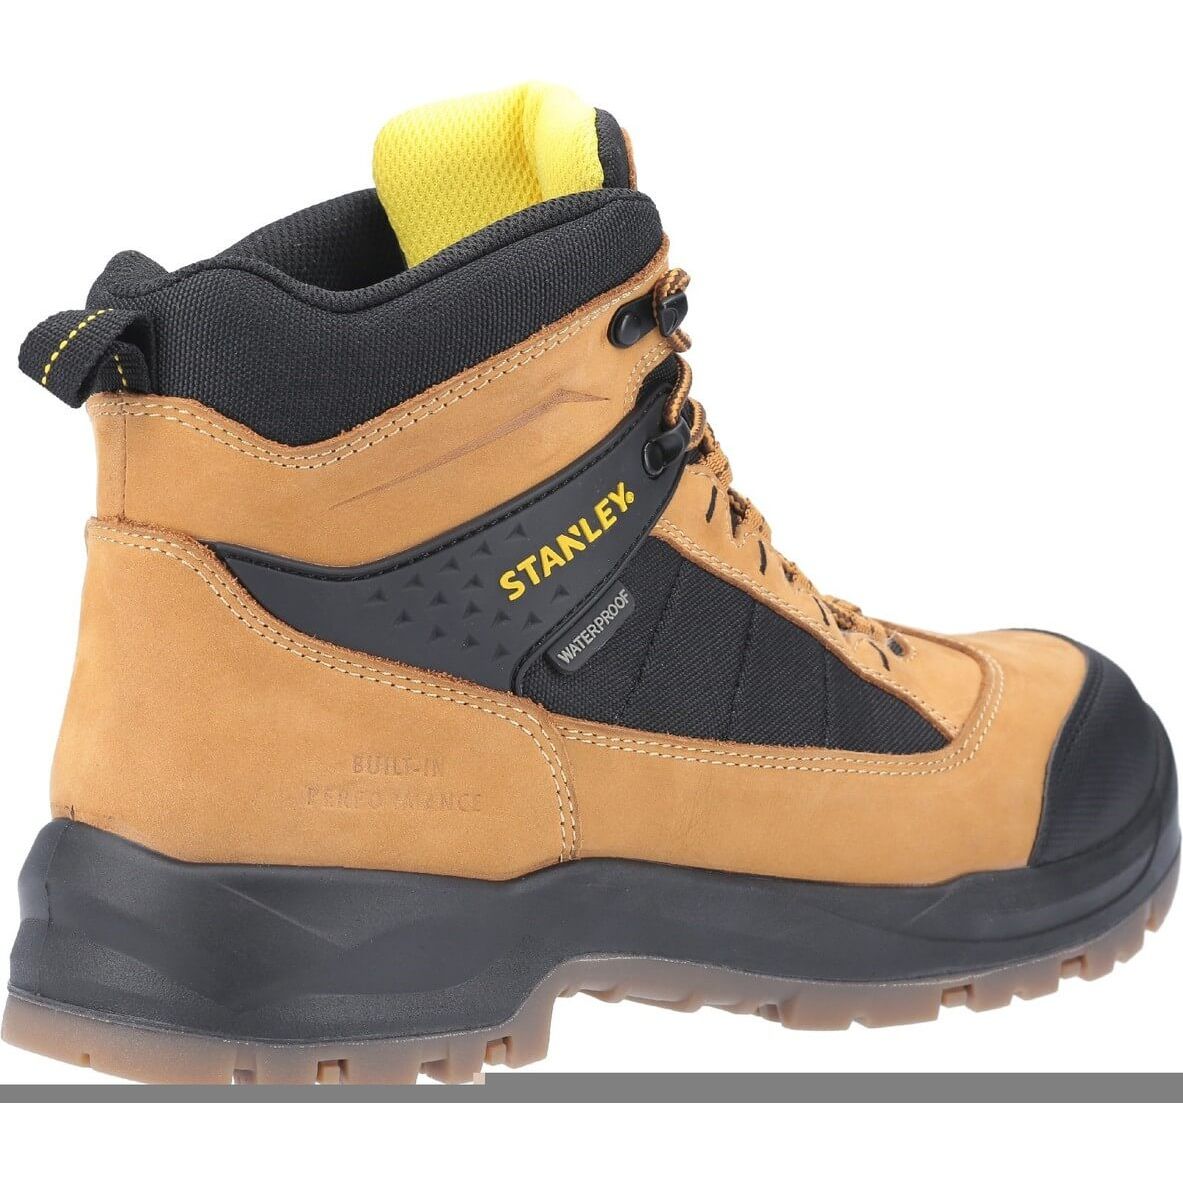 Stanley Warrior Waterproof Safety Boots